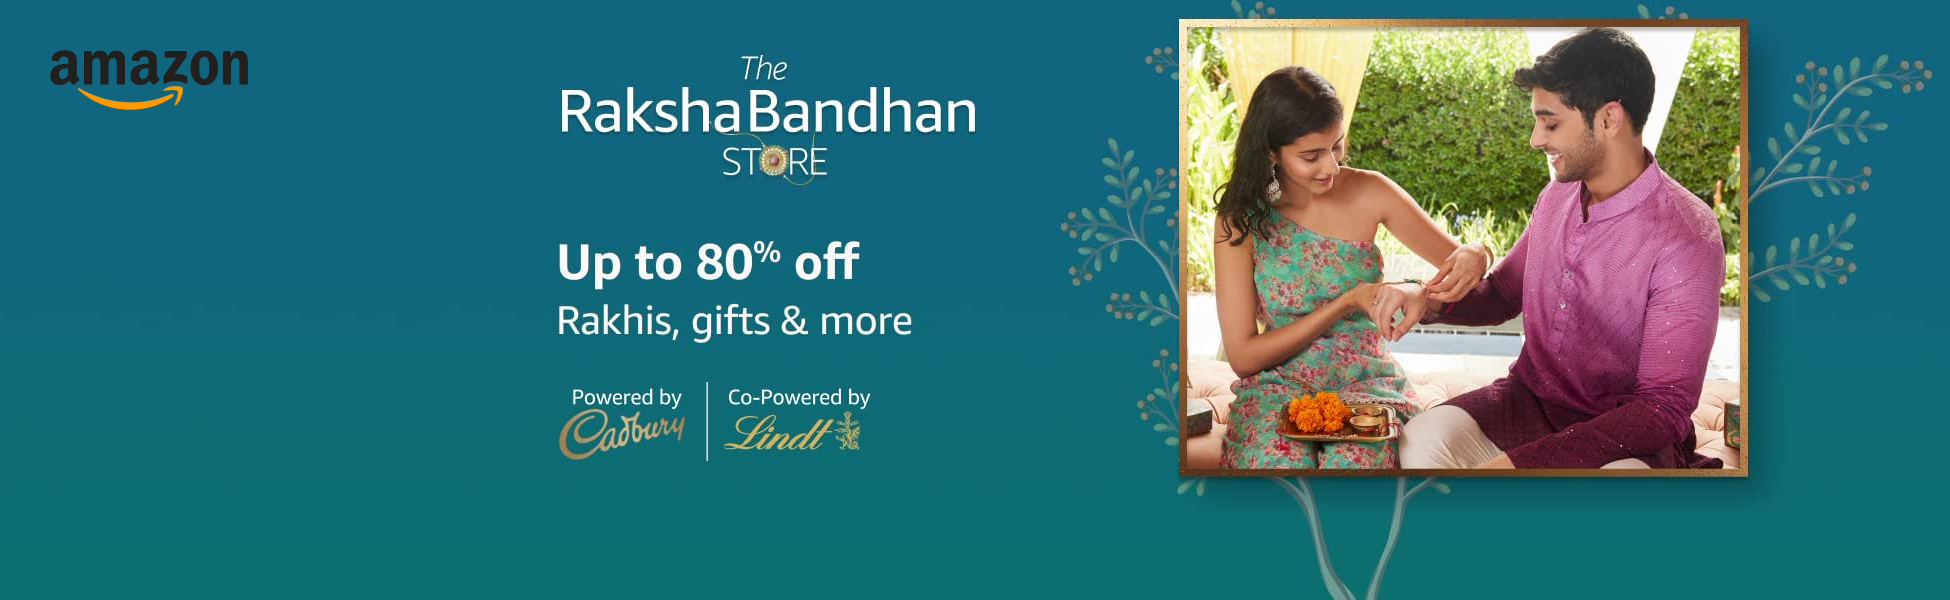 Freeecoupons Amazon Raksha Bandhan Offers